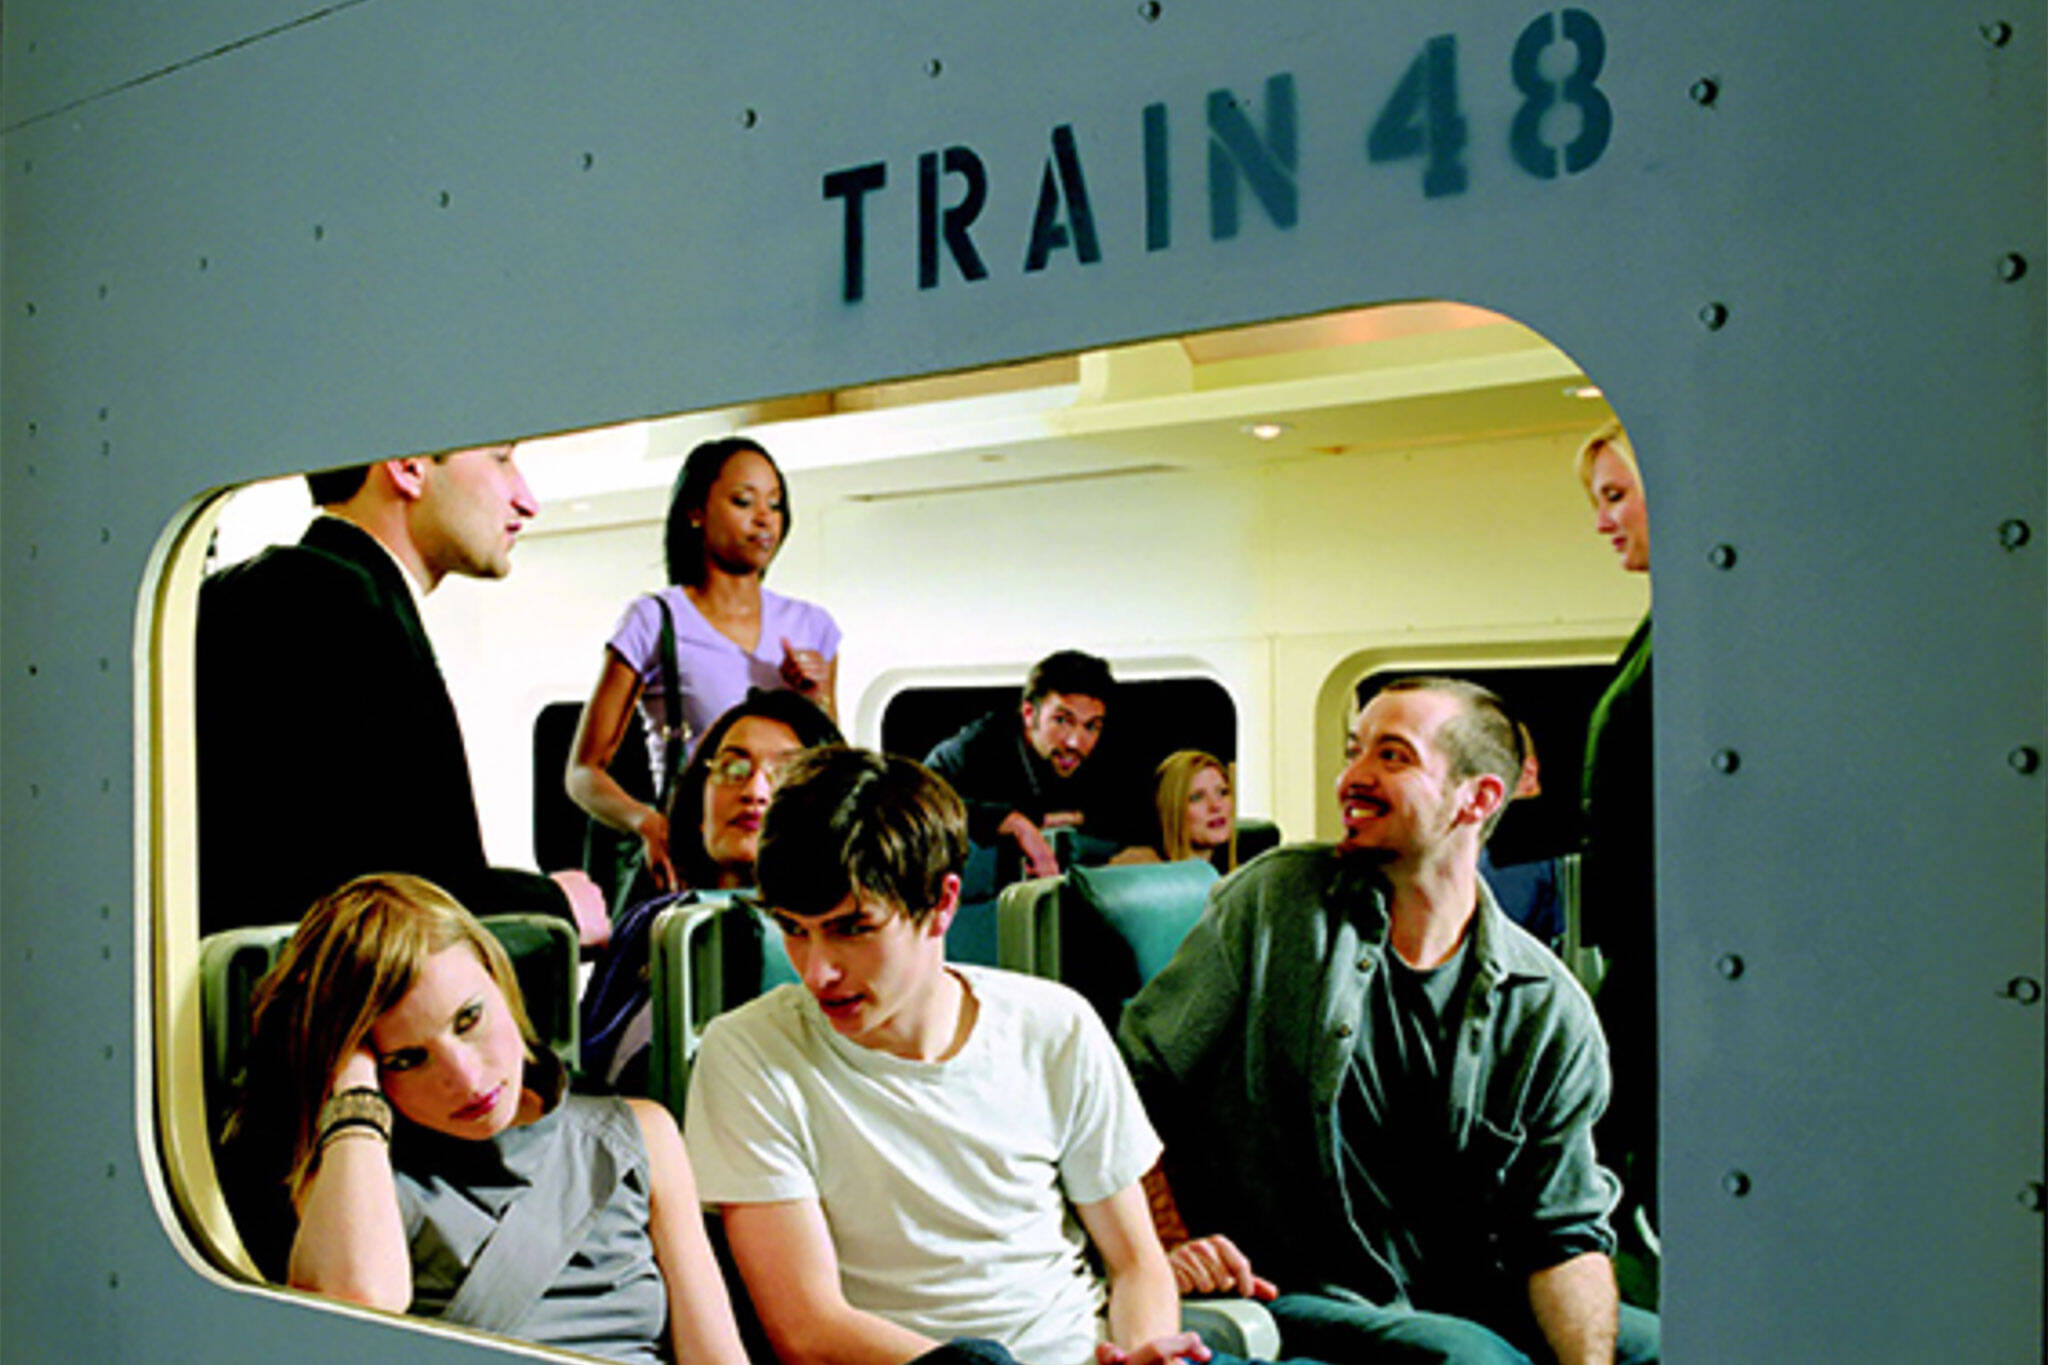 Train 48